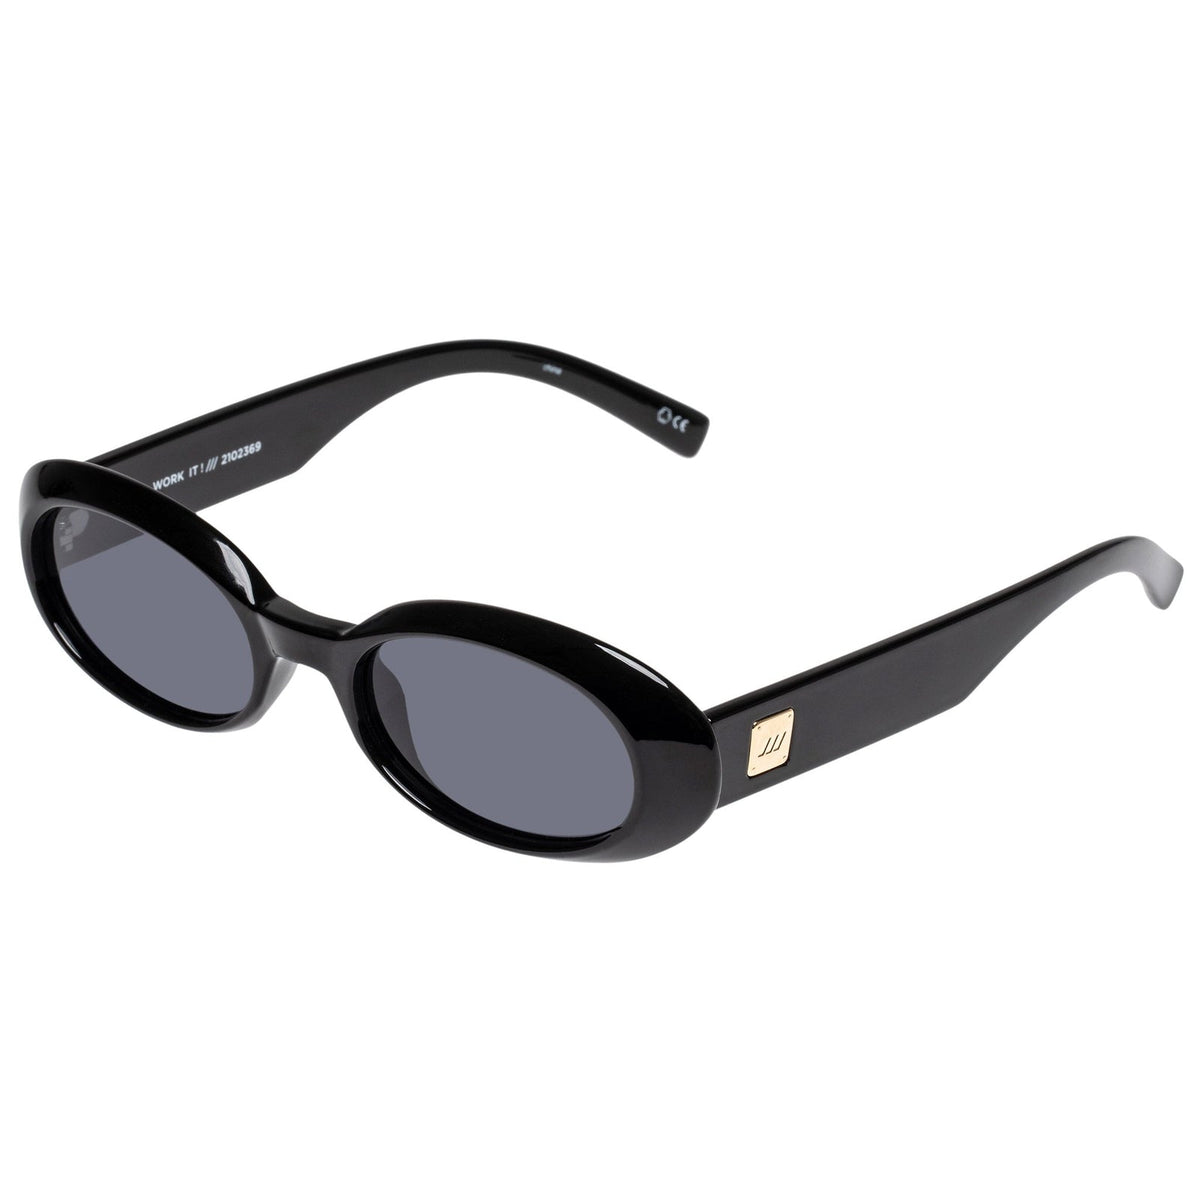 Le Specs - Work it! Sunglasses - Black/Smoke